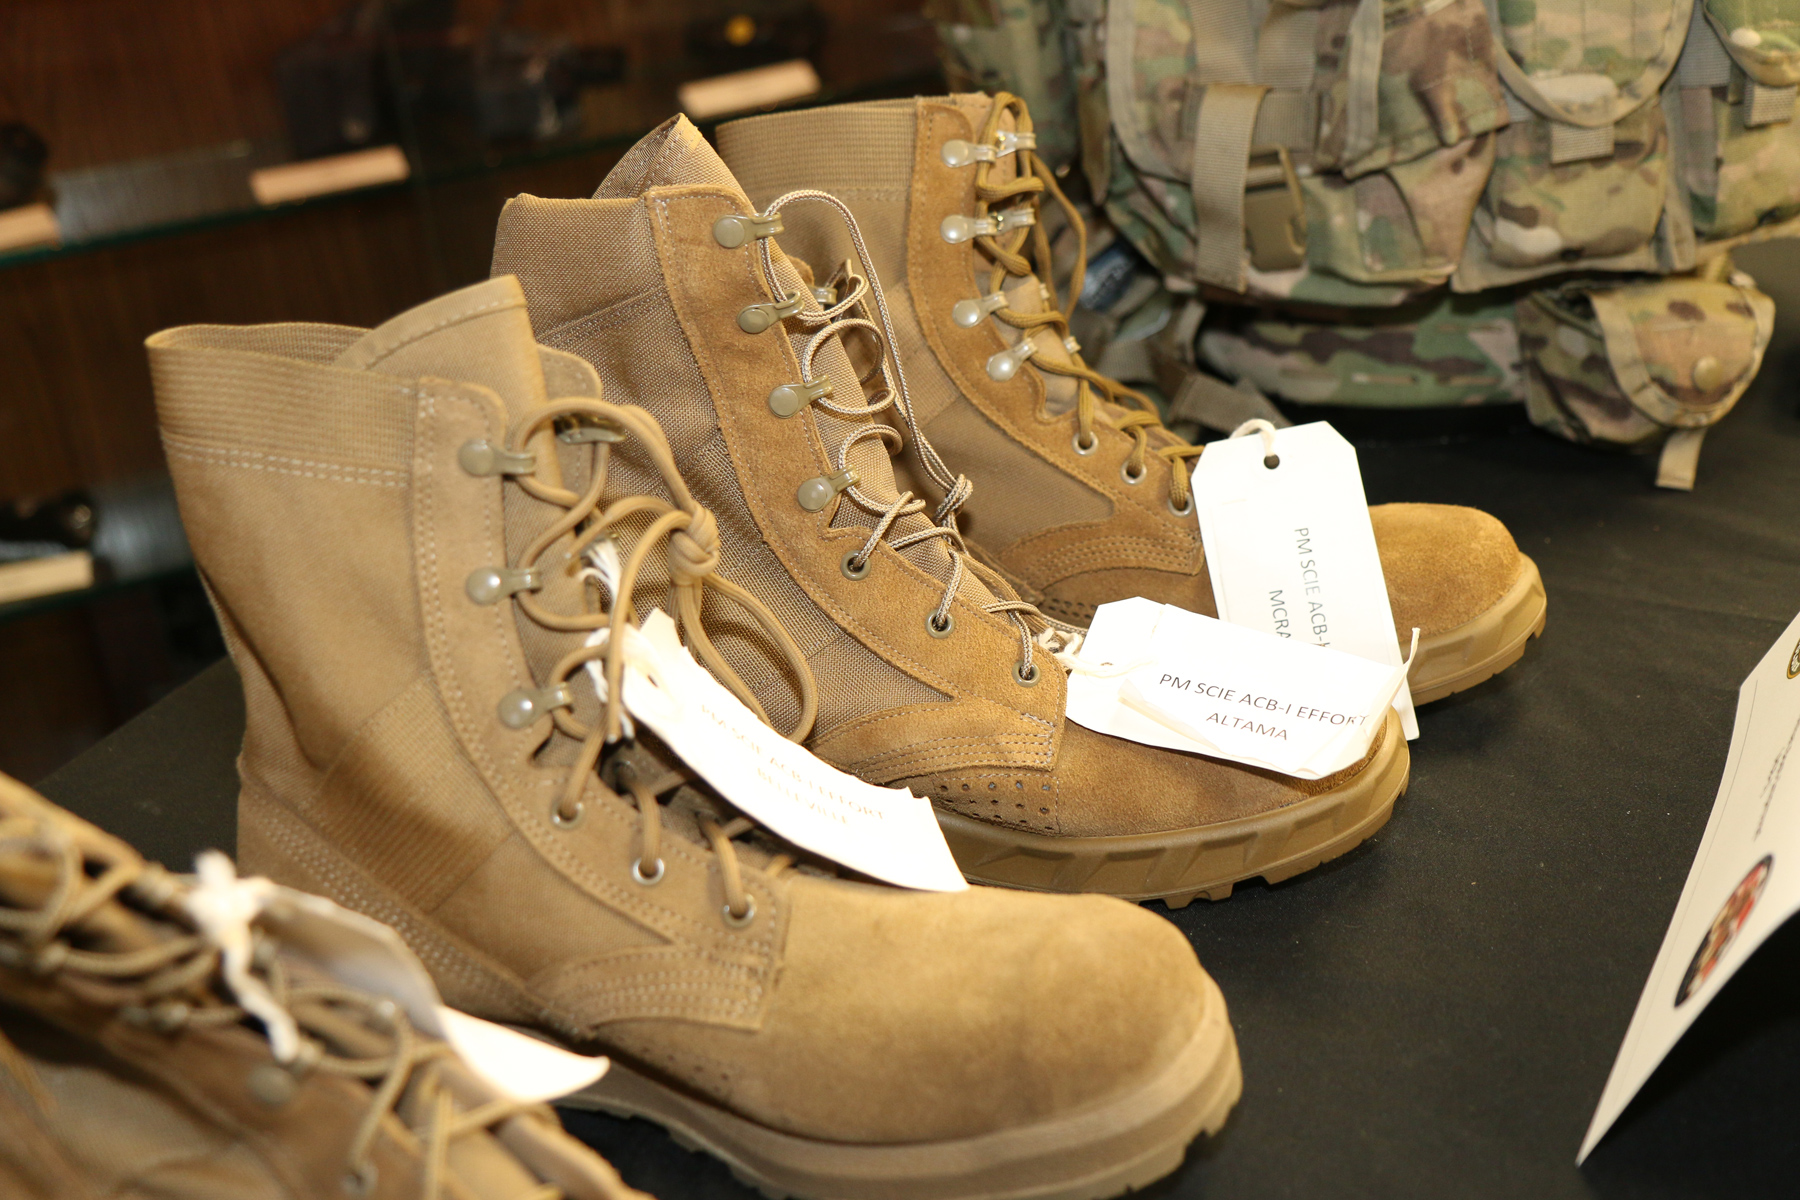 altama army combat boots